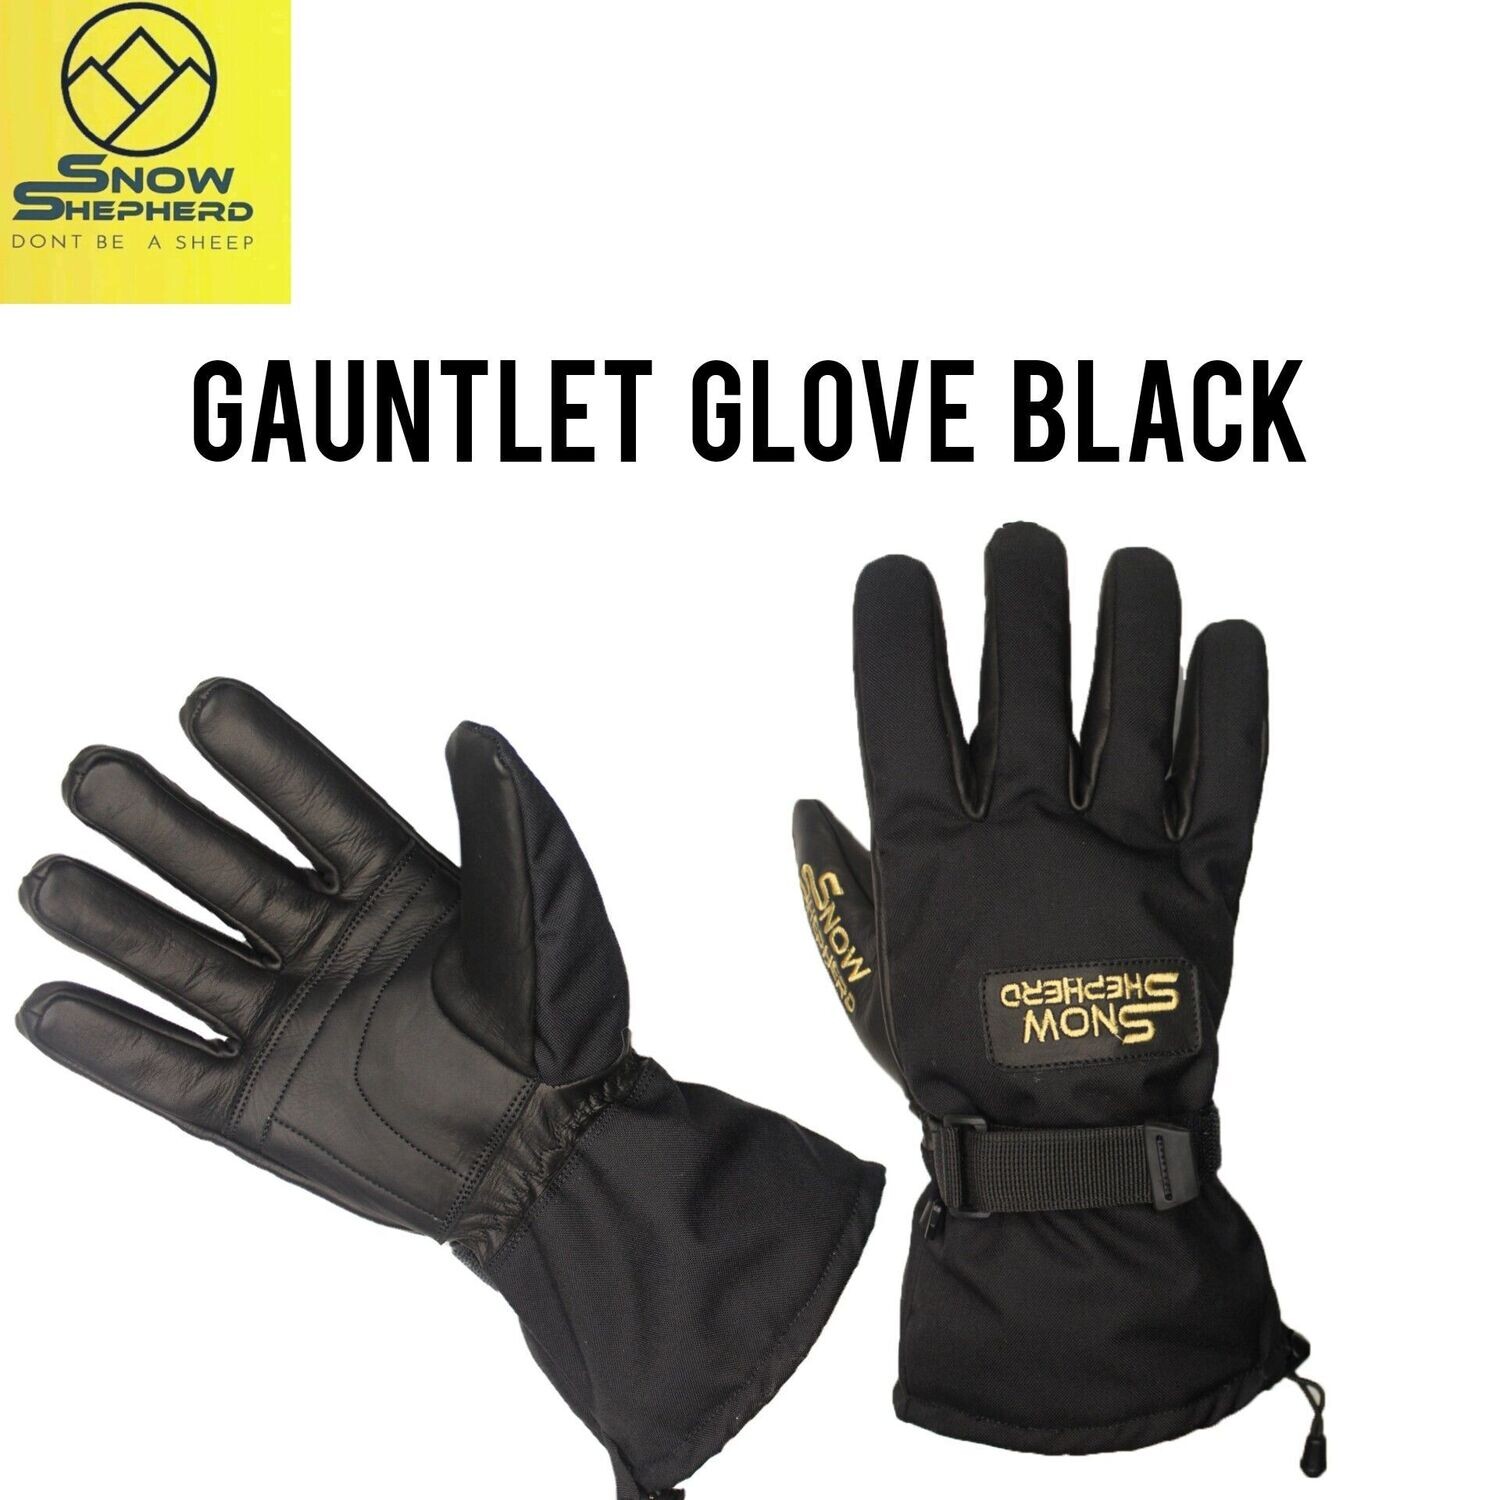 Snowshepherd Gauntlet Gloves Black, Size: Xsmall